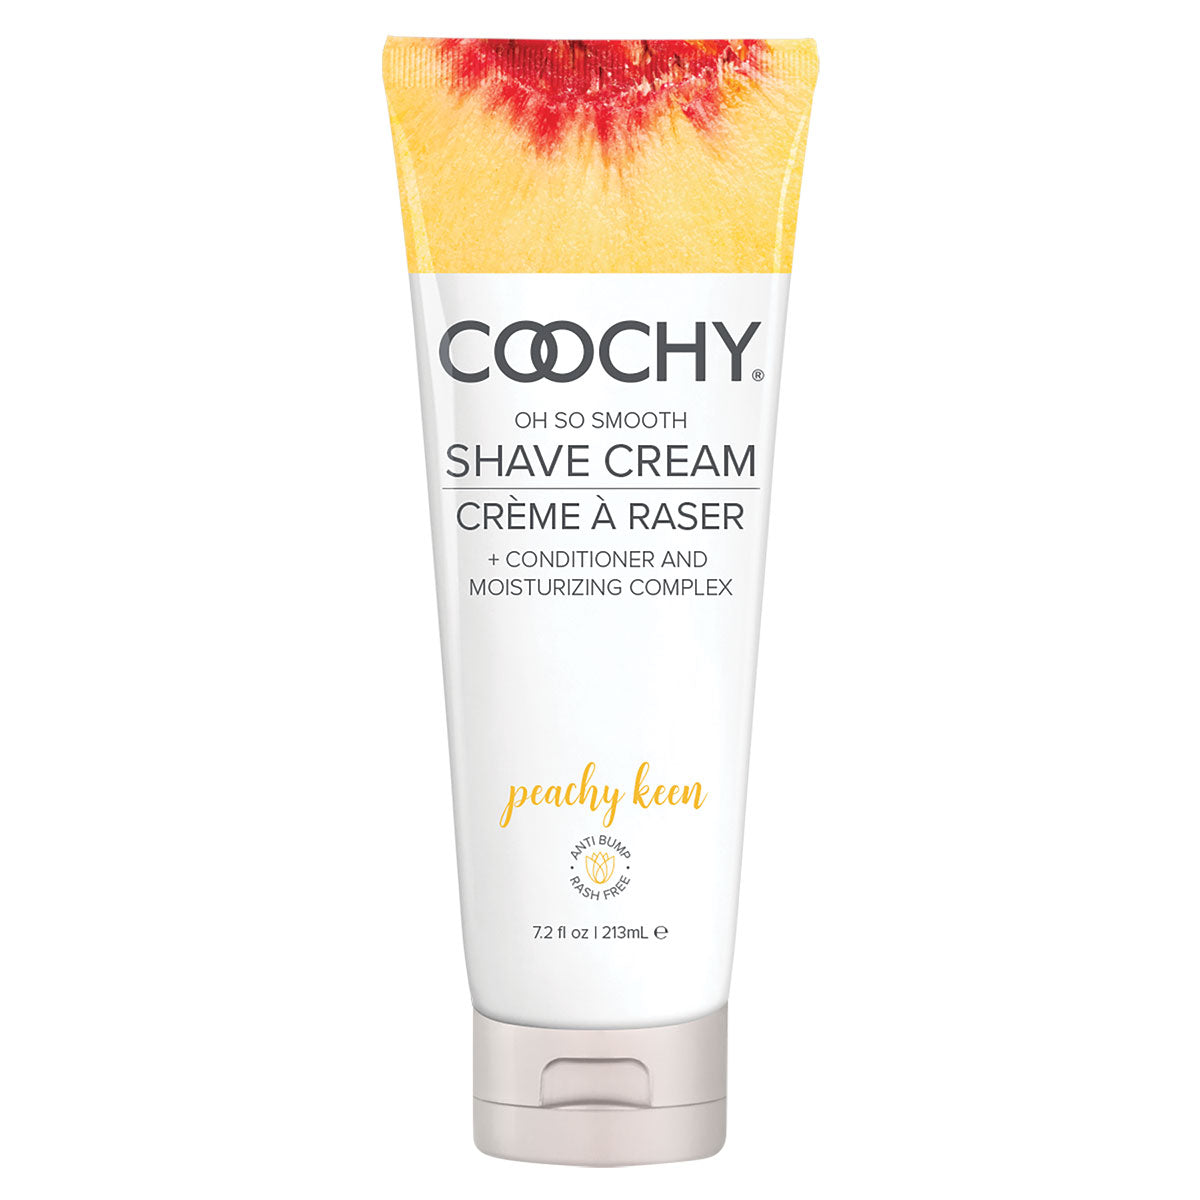 Coochy Peachy Keen Shave Cream